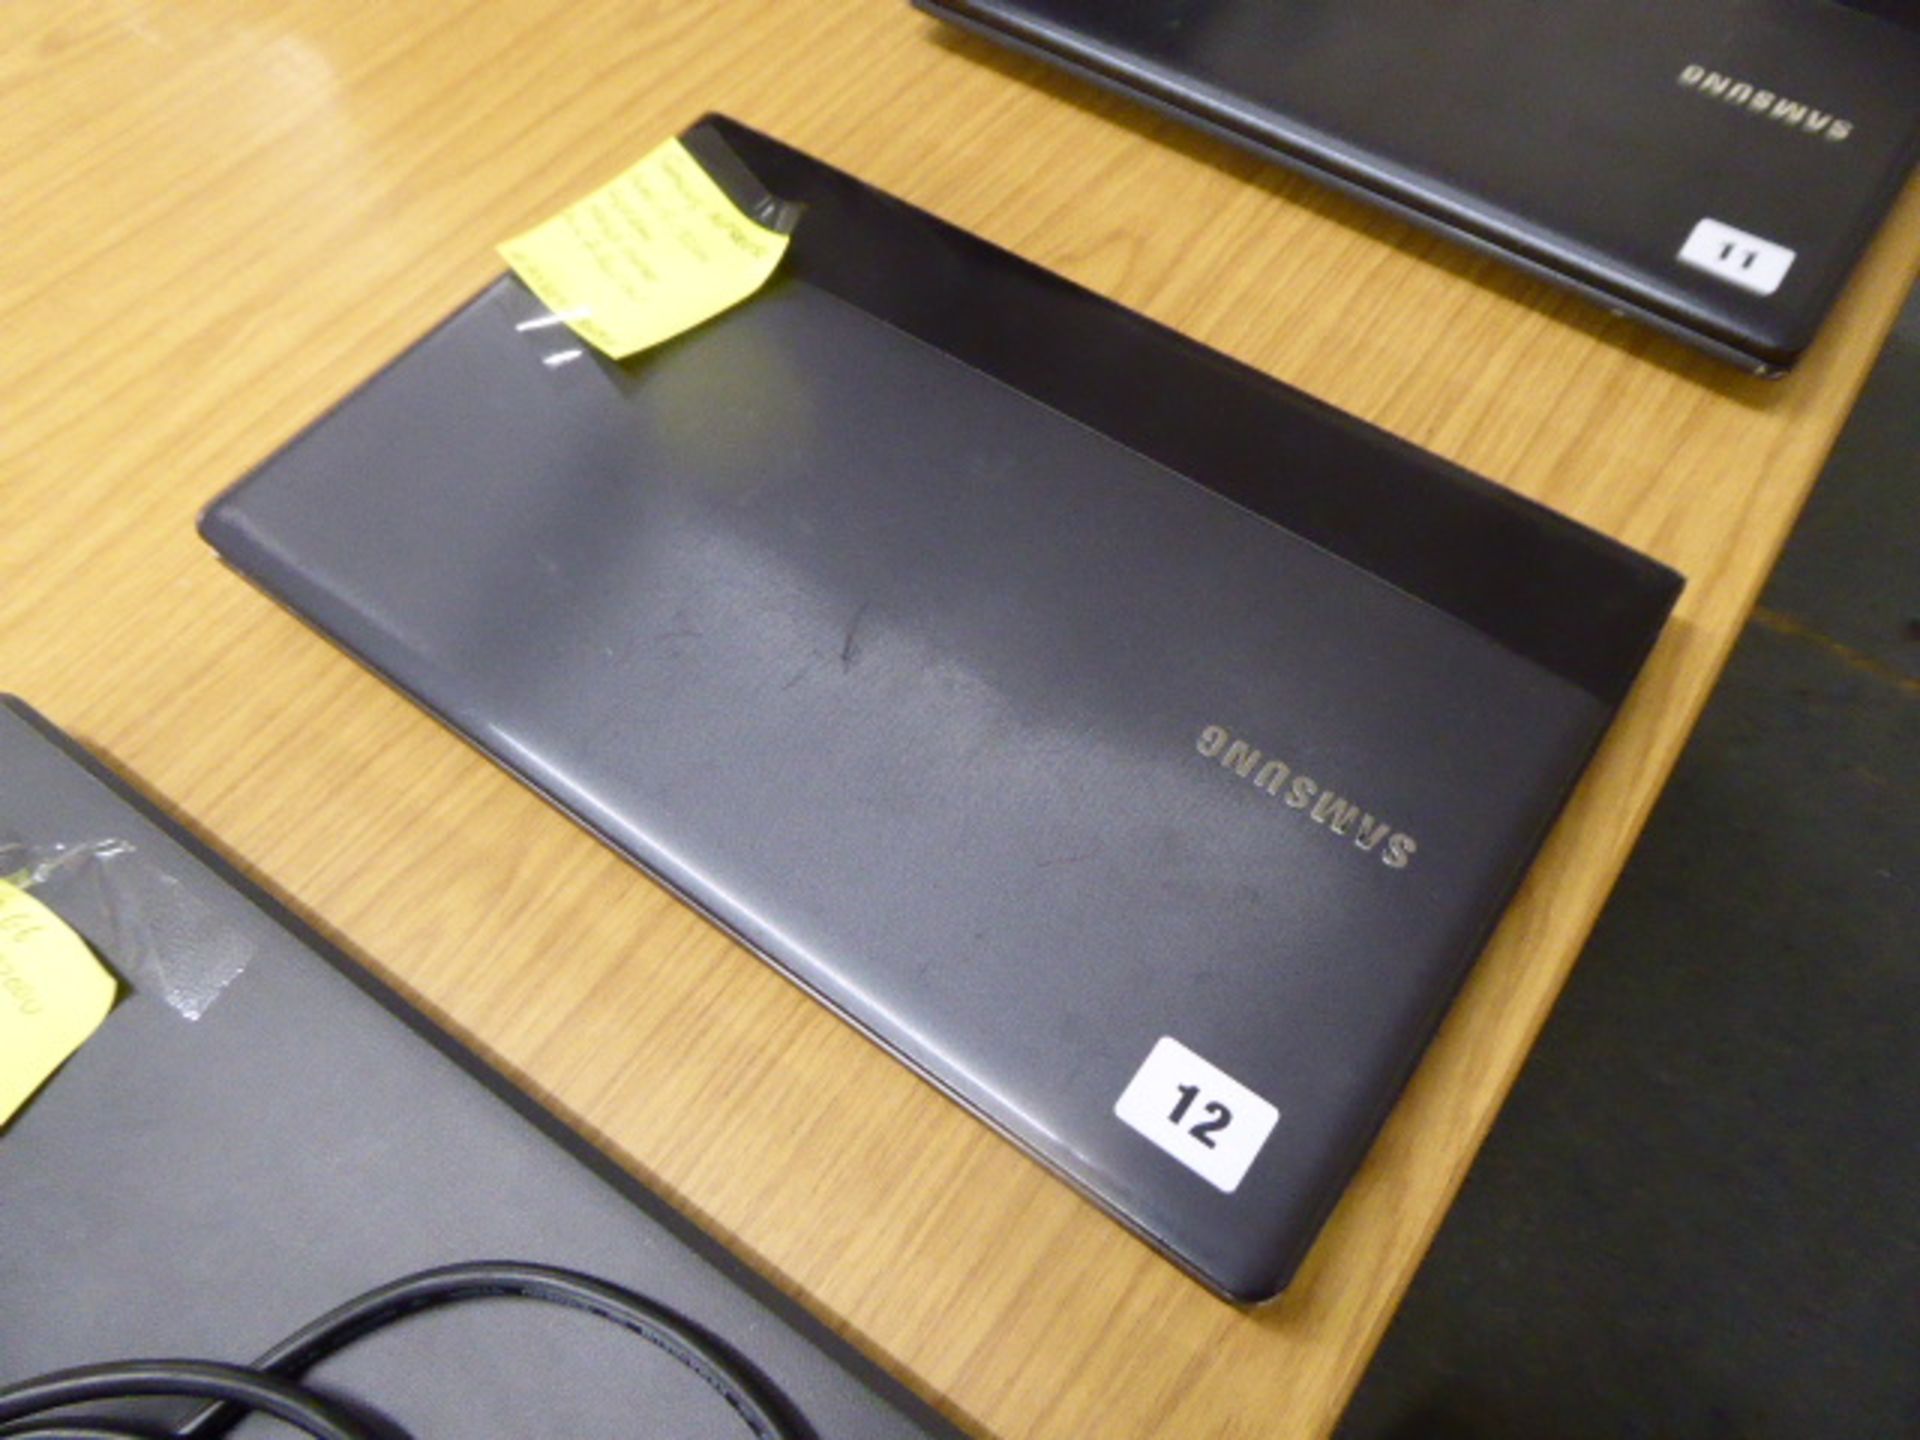 Samsung NP300E5C laptop with Intel i5-3210M processor, 4gb ram, 500gb storage and Windows 7 Pro,